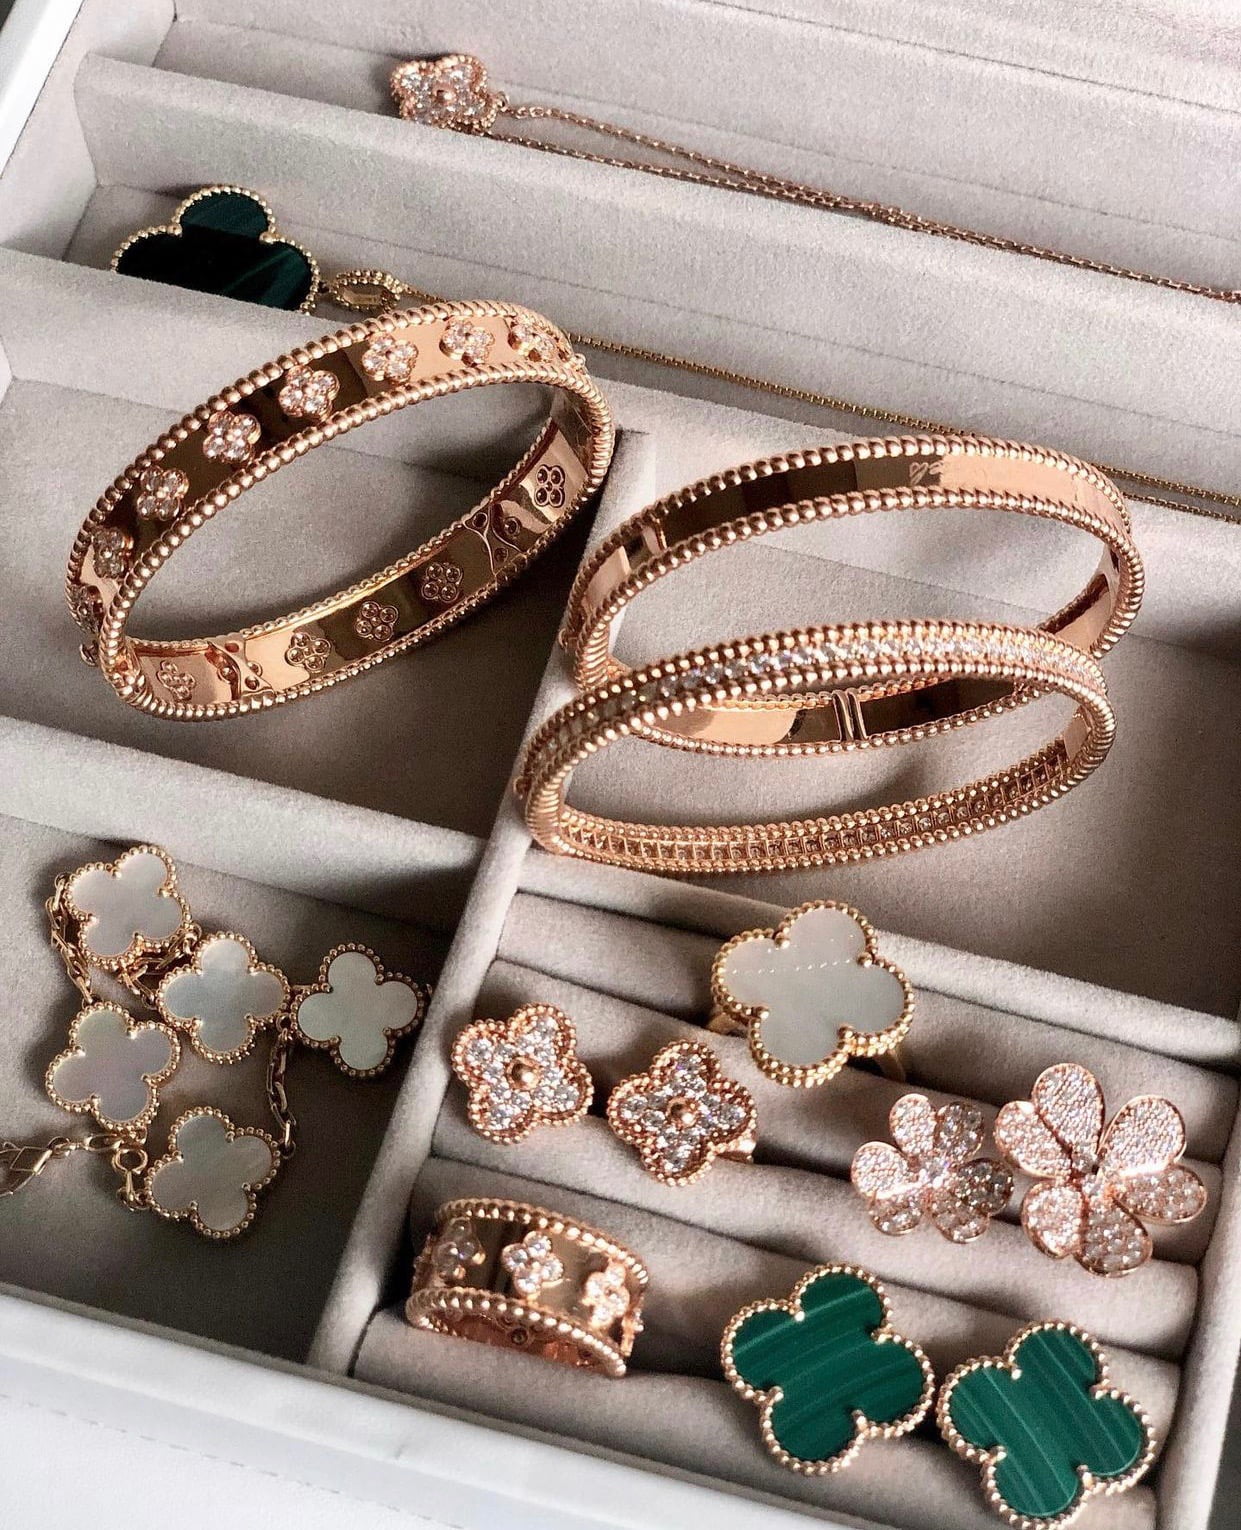 Sweet replica Van Cleef & Arpels Alhambra pink gold bracelet 1 motifs :  vancleef-jewelry